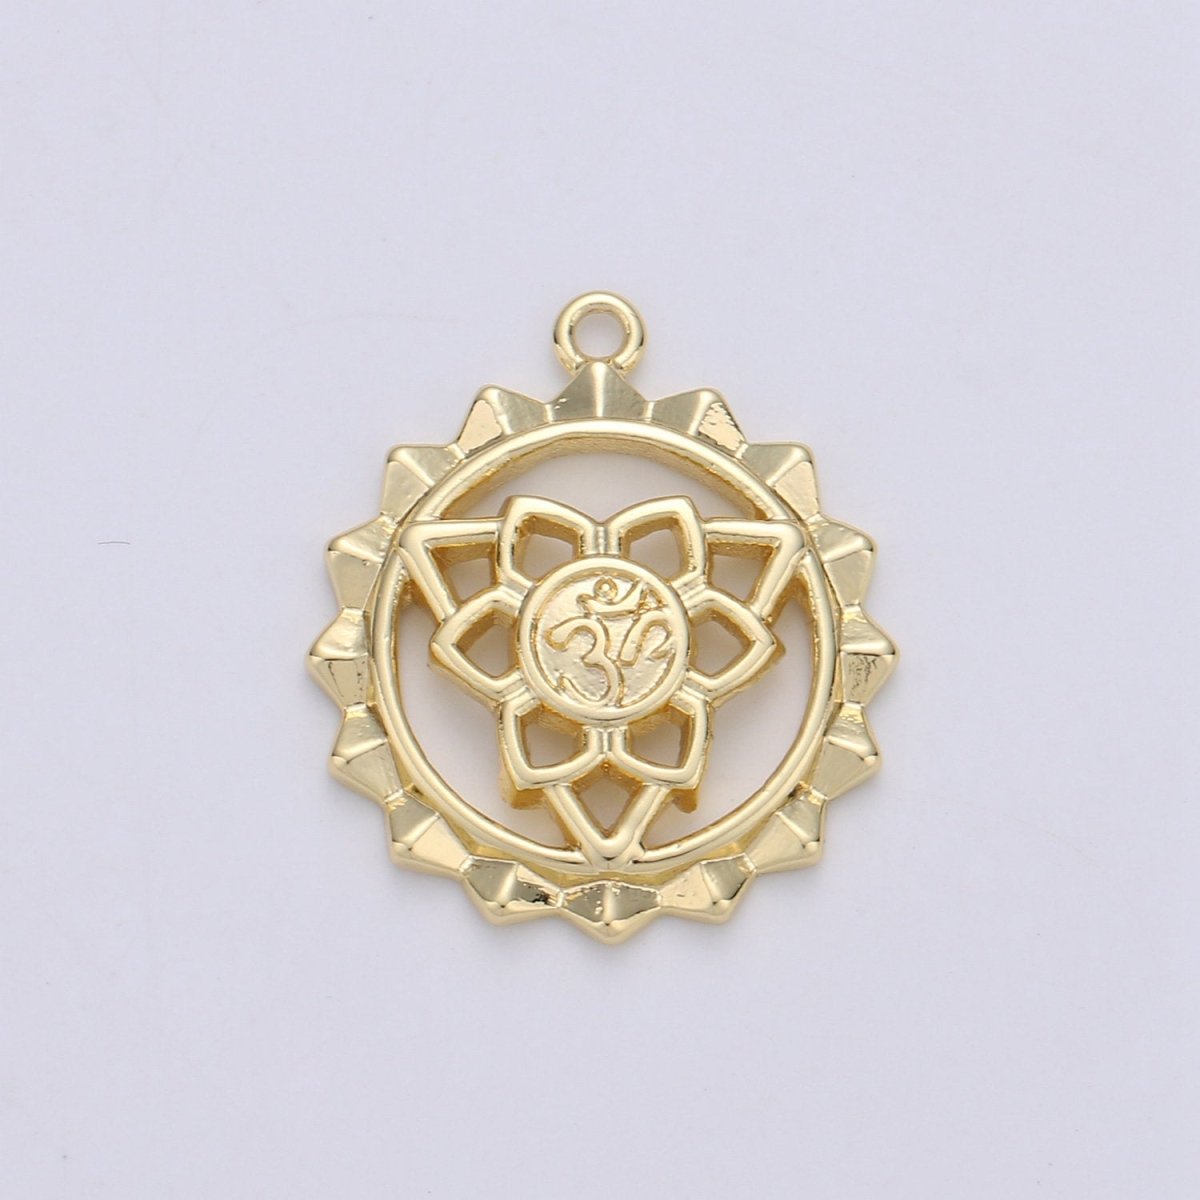 24K Gold Filled Lotus Flower Ohm Dainty Charm Religious Zen Peace Pendant for Necklace or Bracelet, C-876 - DLUXCA